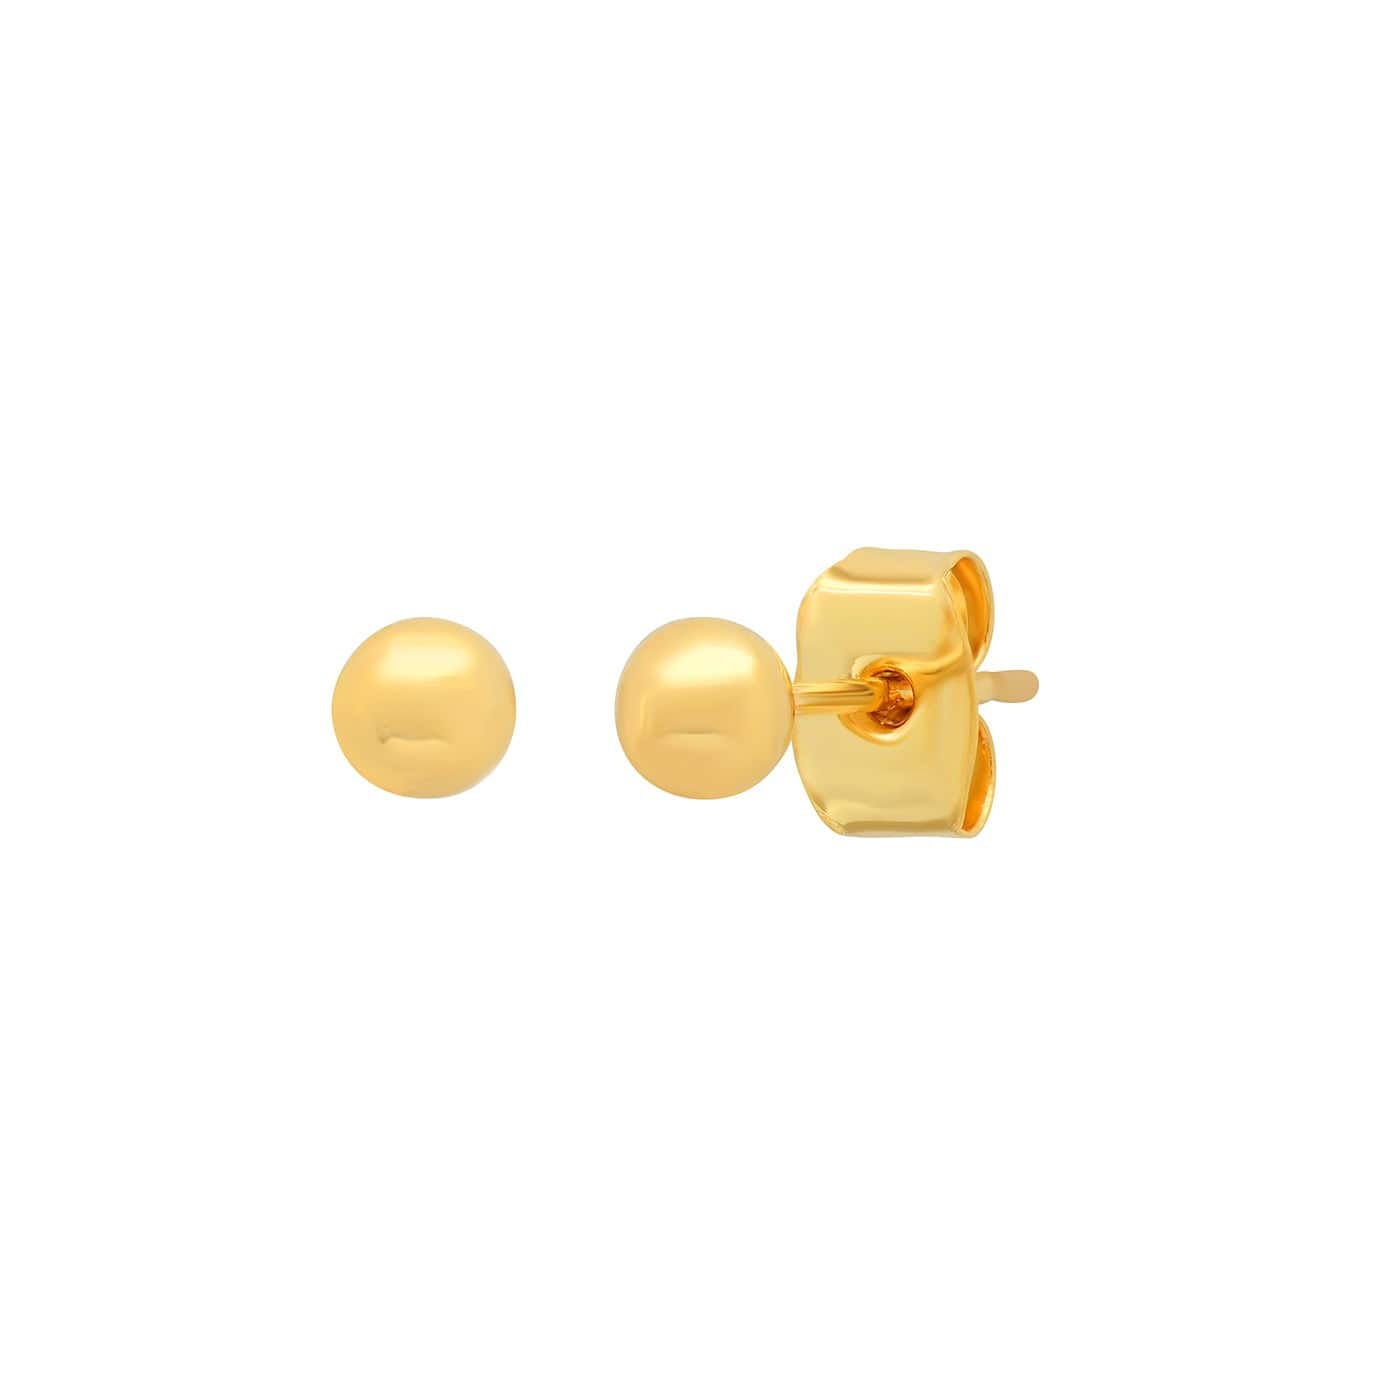 TAI JEWELRY Earrings Gold Sphere Studs | 4mm